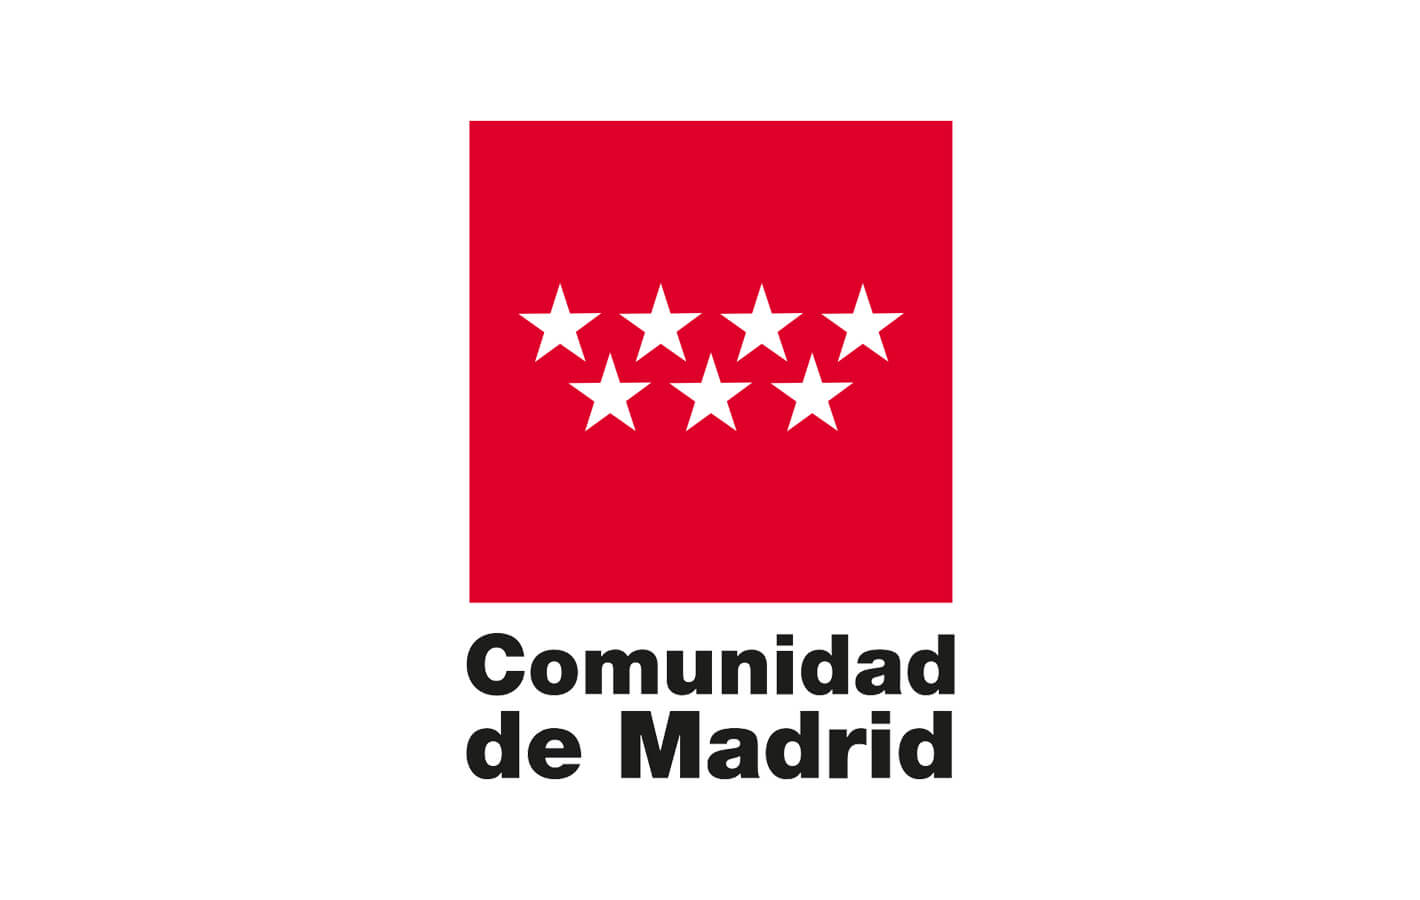 Communauté de Madrid